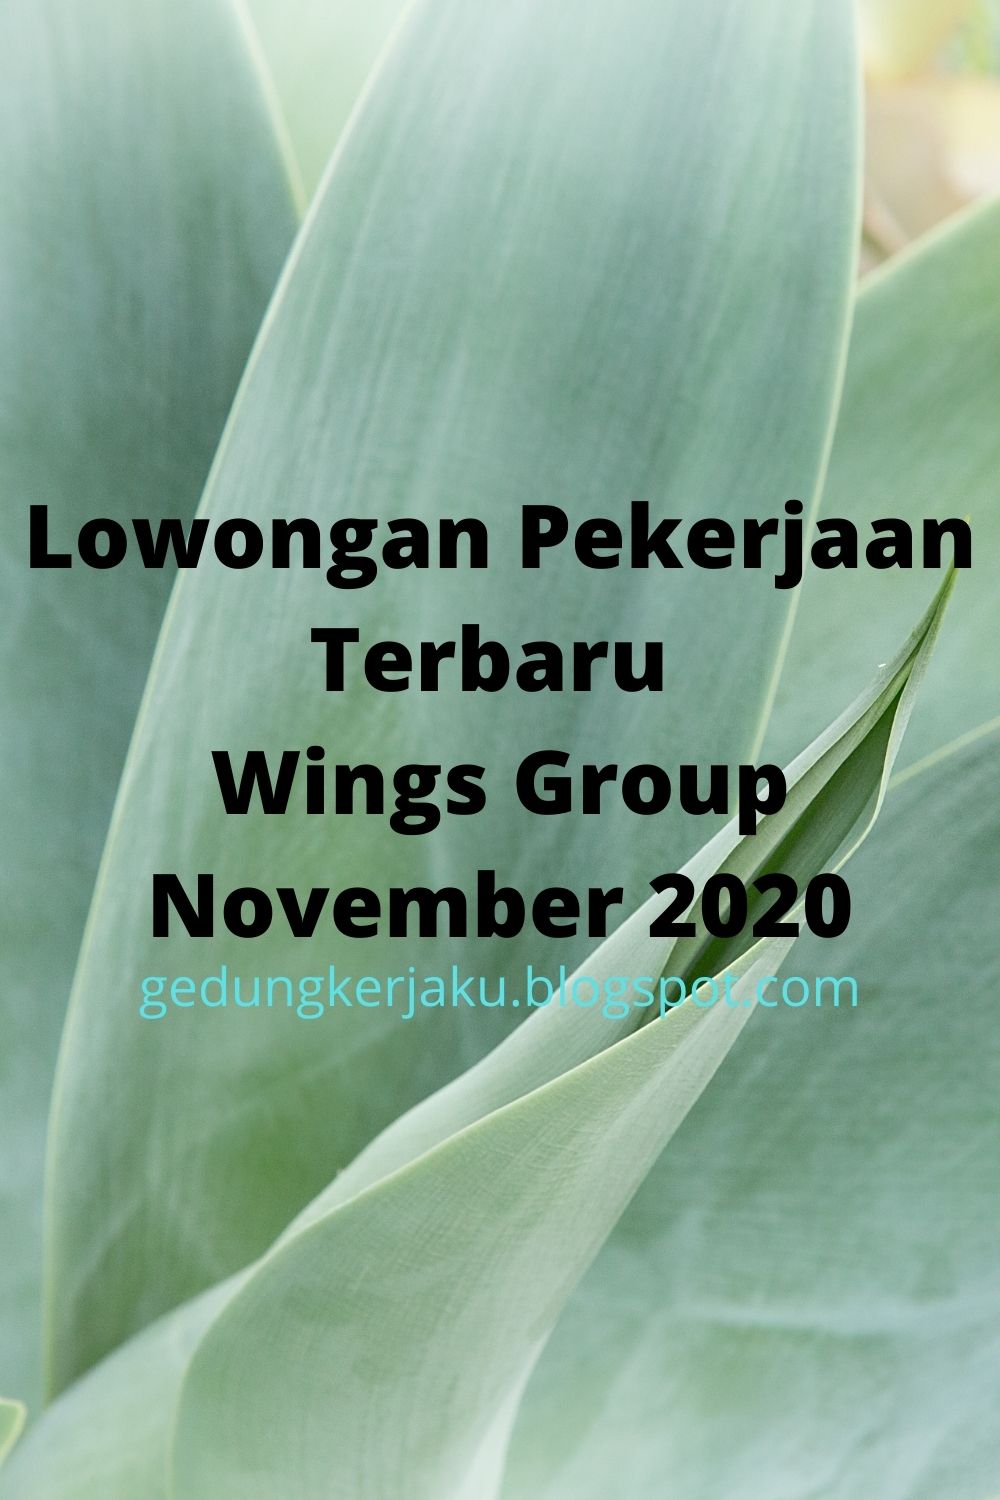 Lowongan Pekerjaan Wings Group November 2020